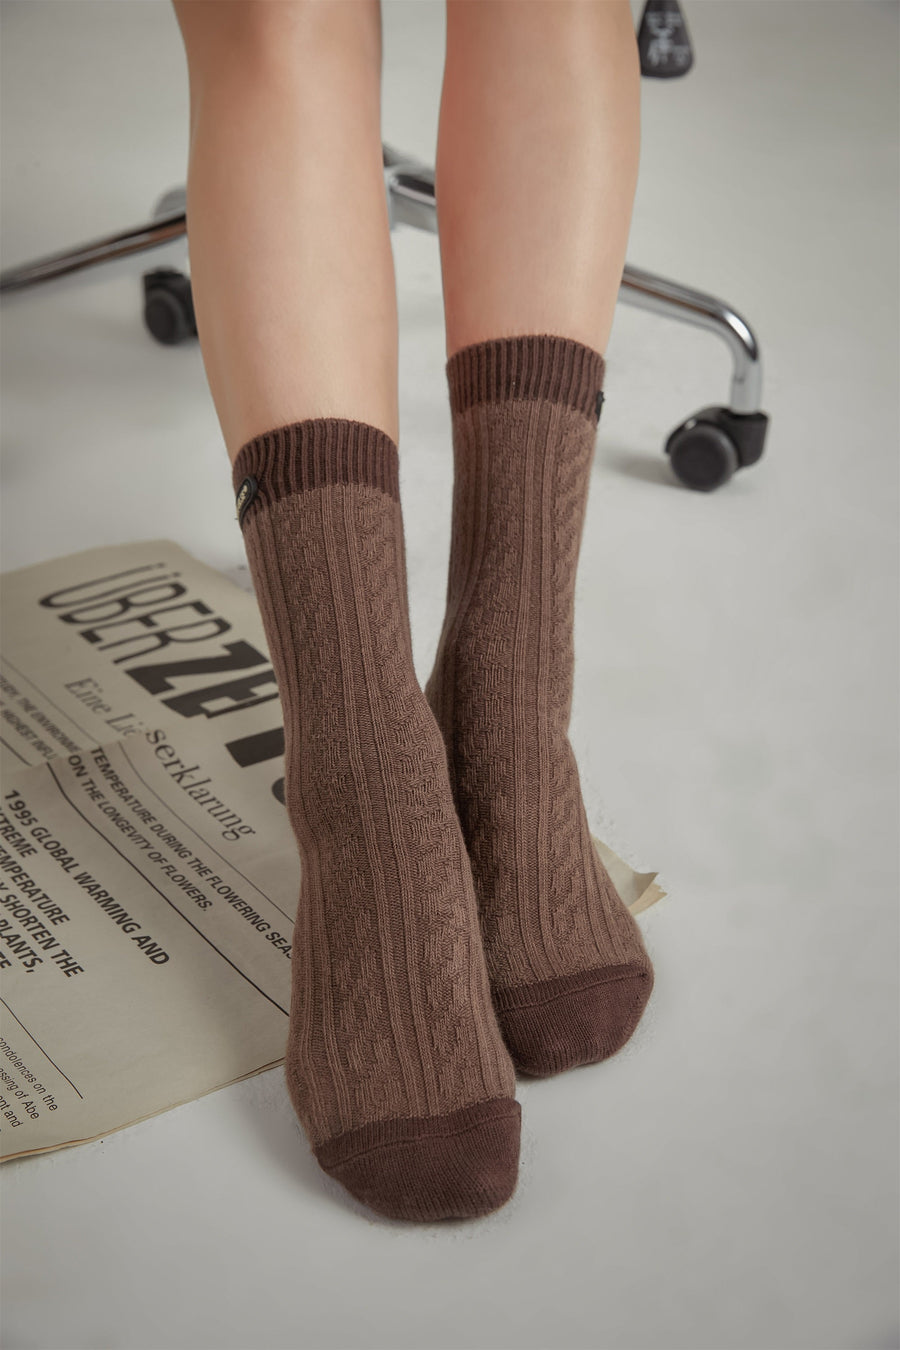 CHUU Jacquard Twisted Knit Socks